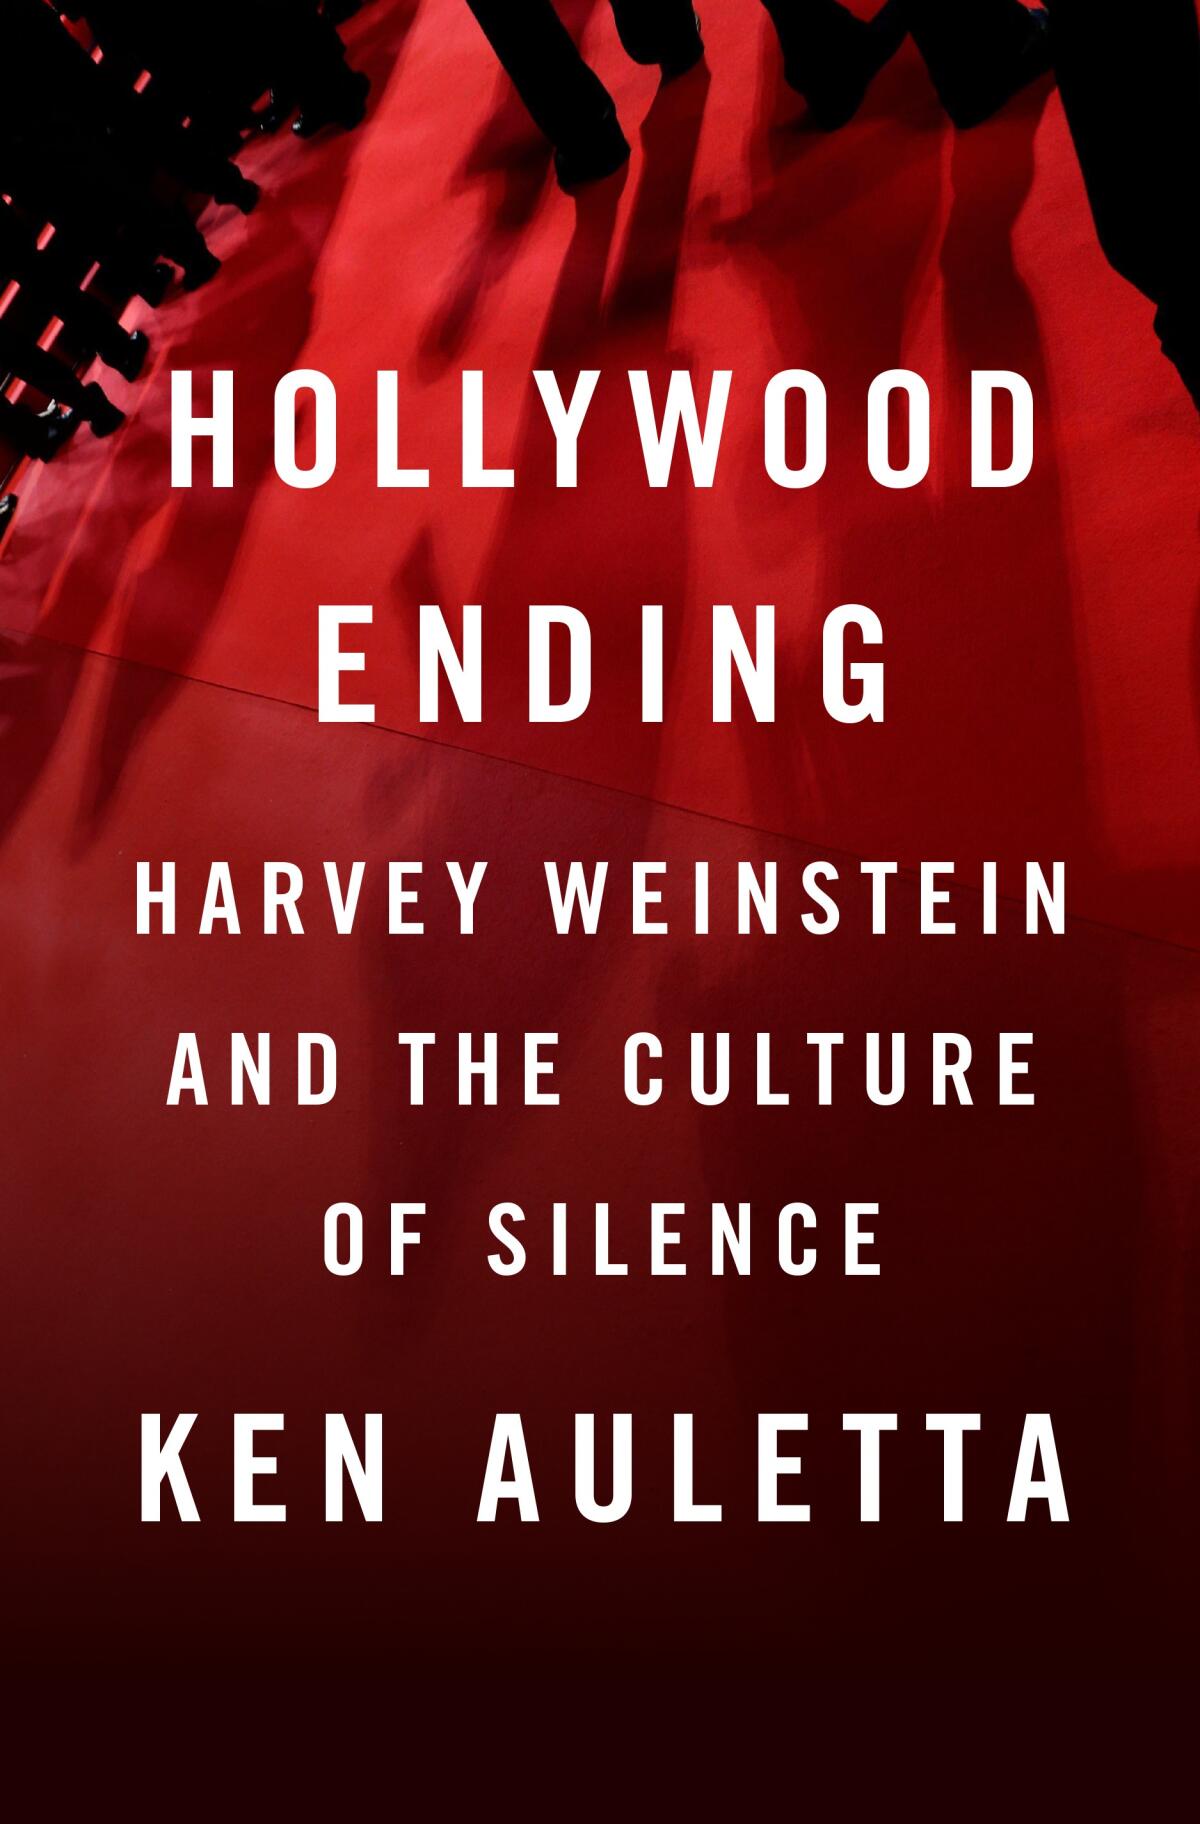 "Hollywood Ending," by Ken Auletta